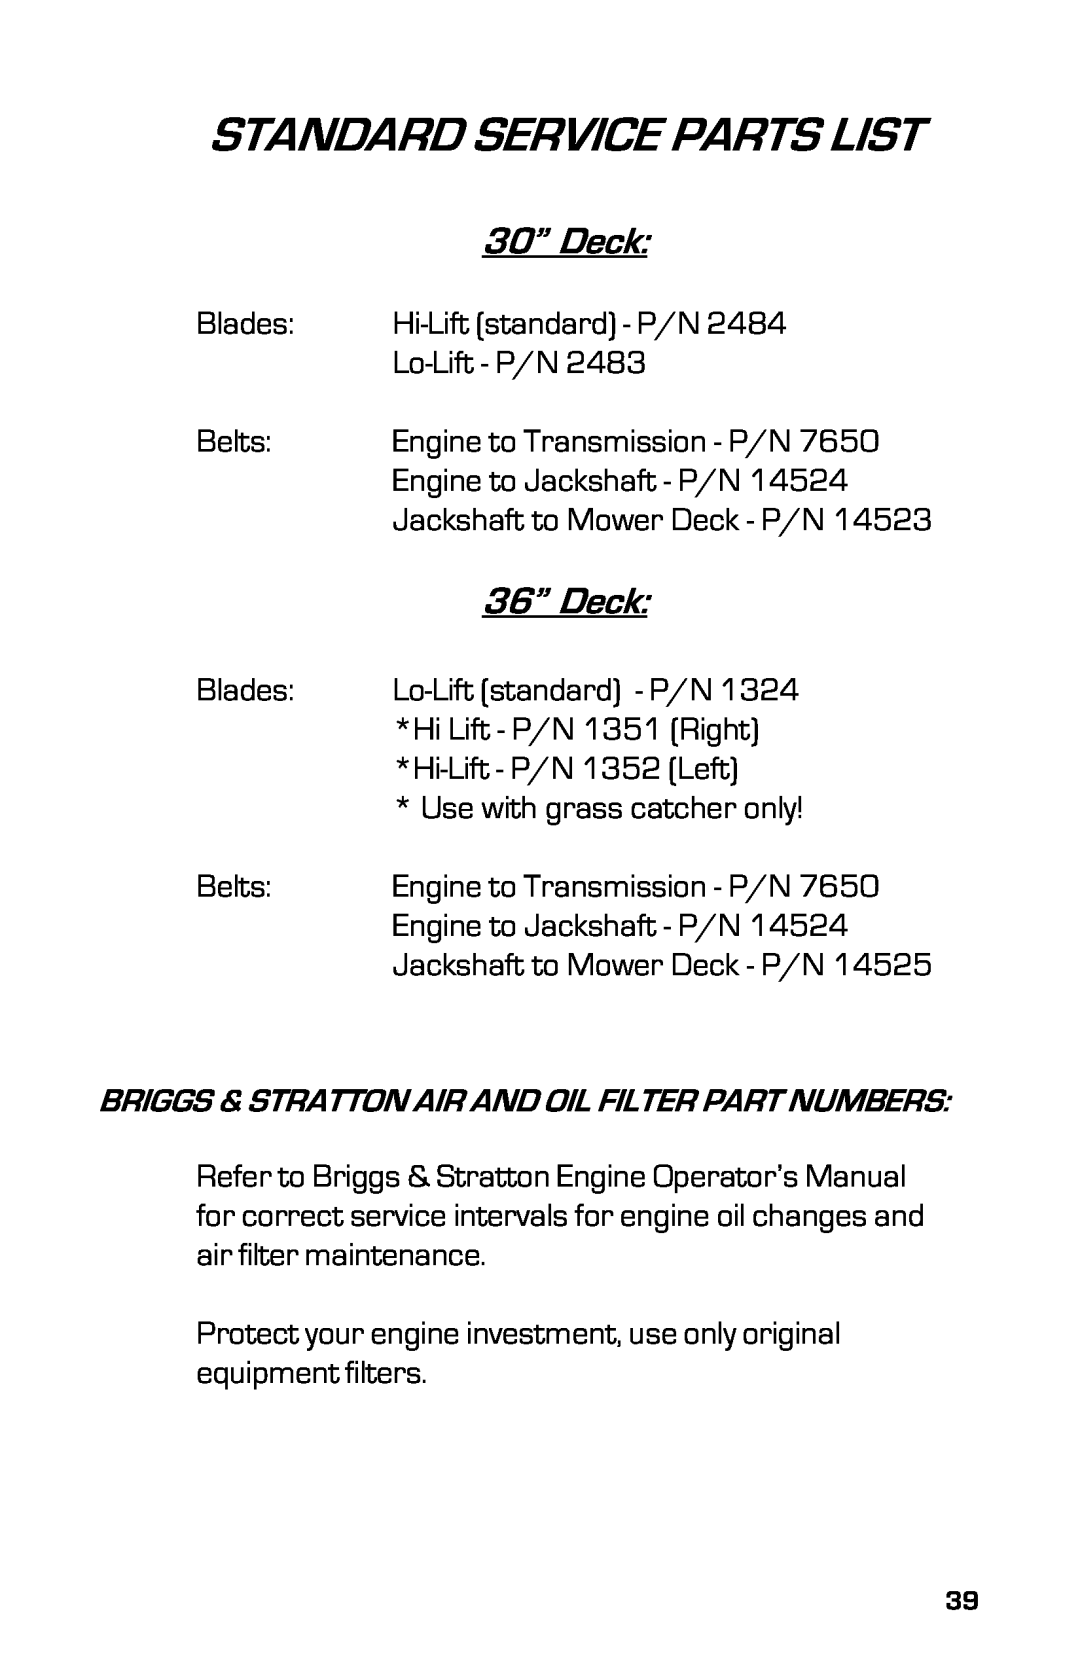 Dixon 3500 Series manual Standard Service Parts List, 30” Deck, 36” Deck 